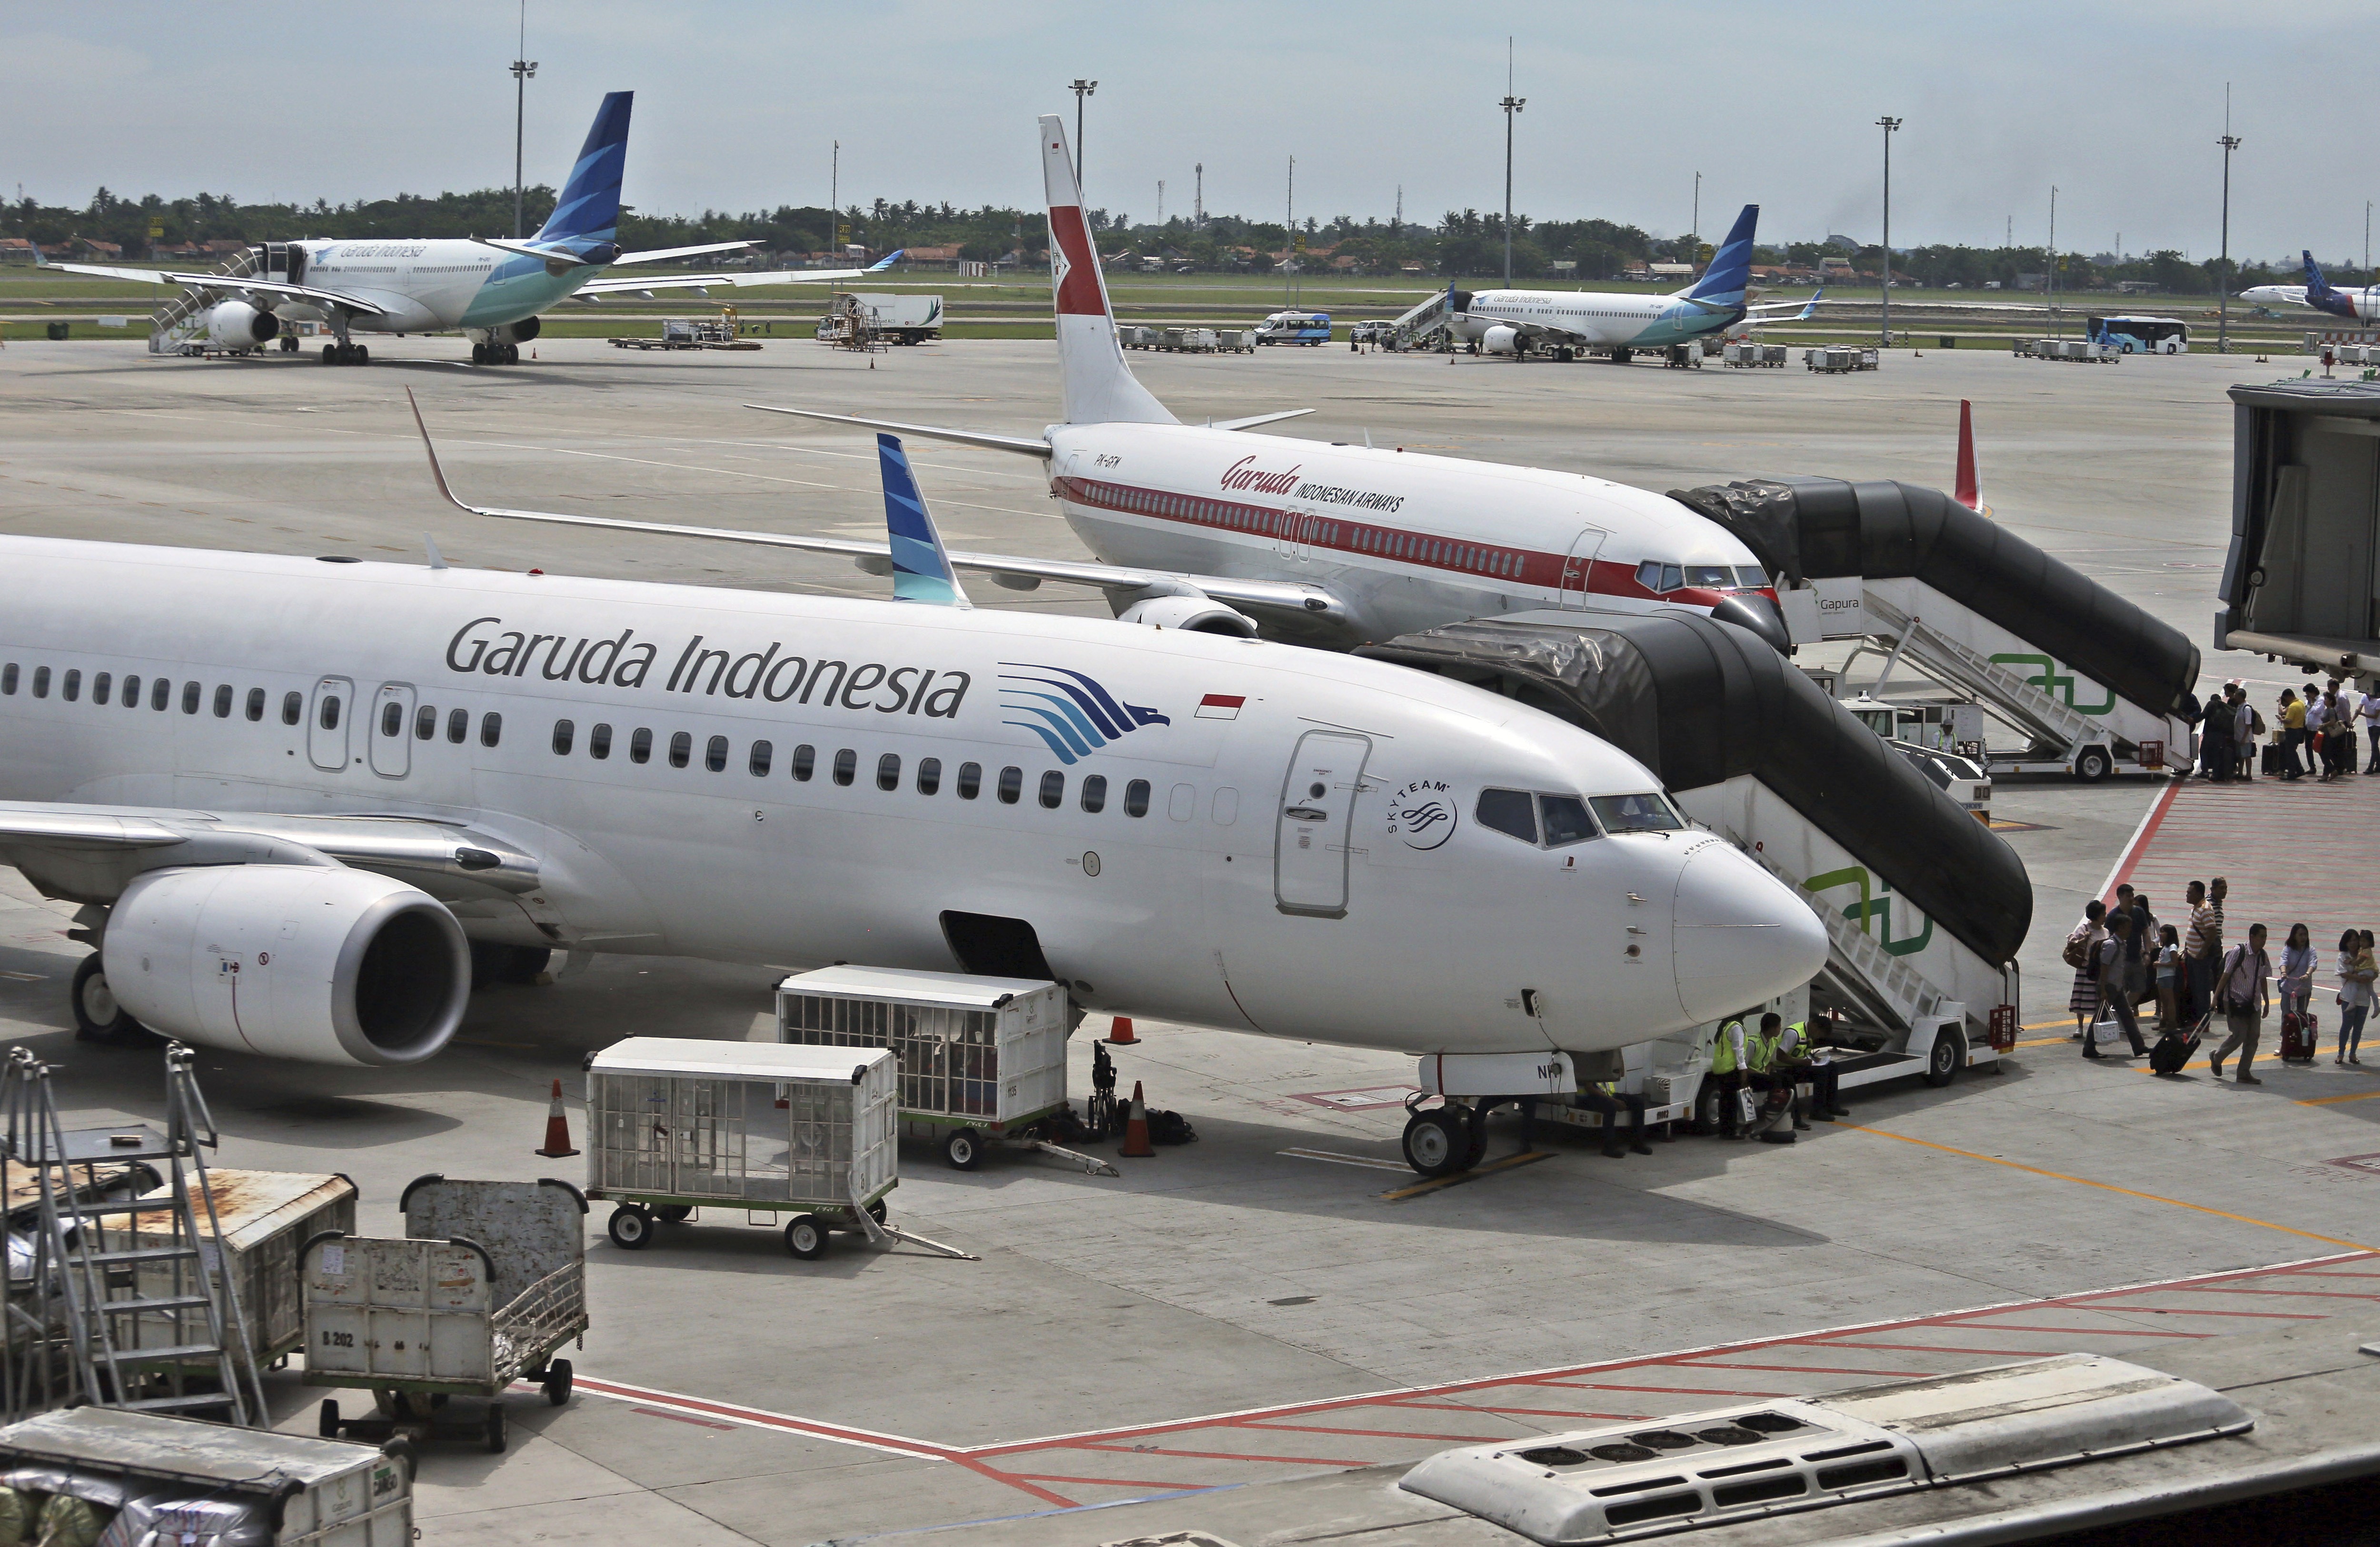 Garuda Indonesia planes at the Soekarno-Hatta International Airport. Photo: AP